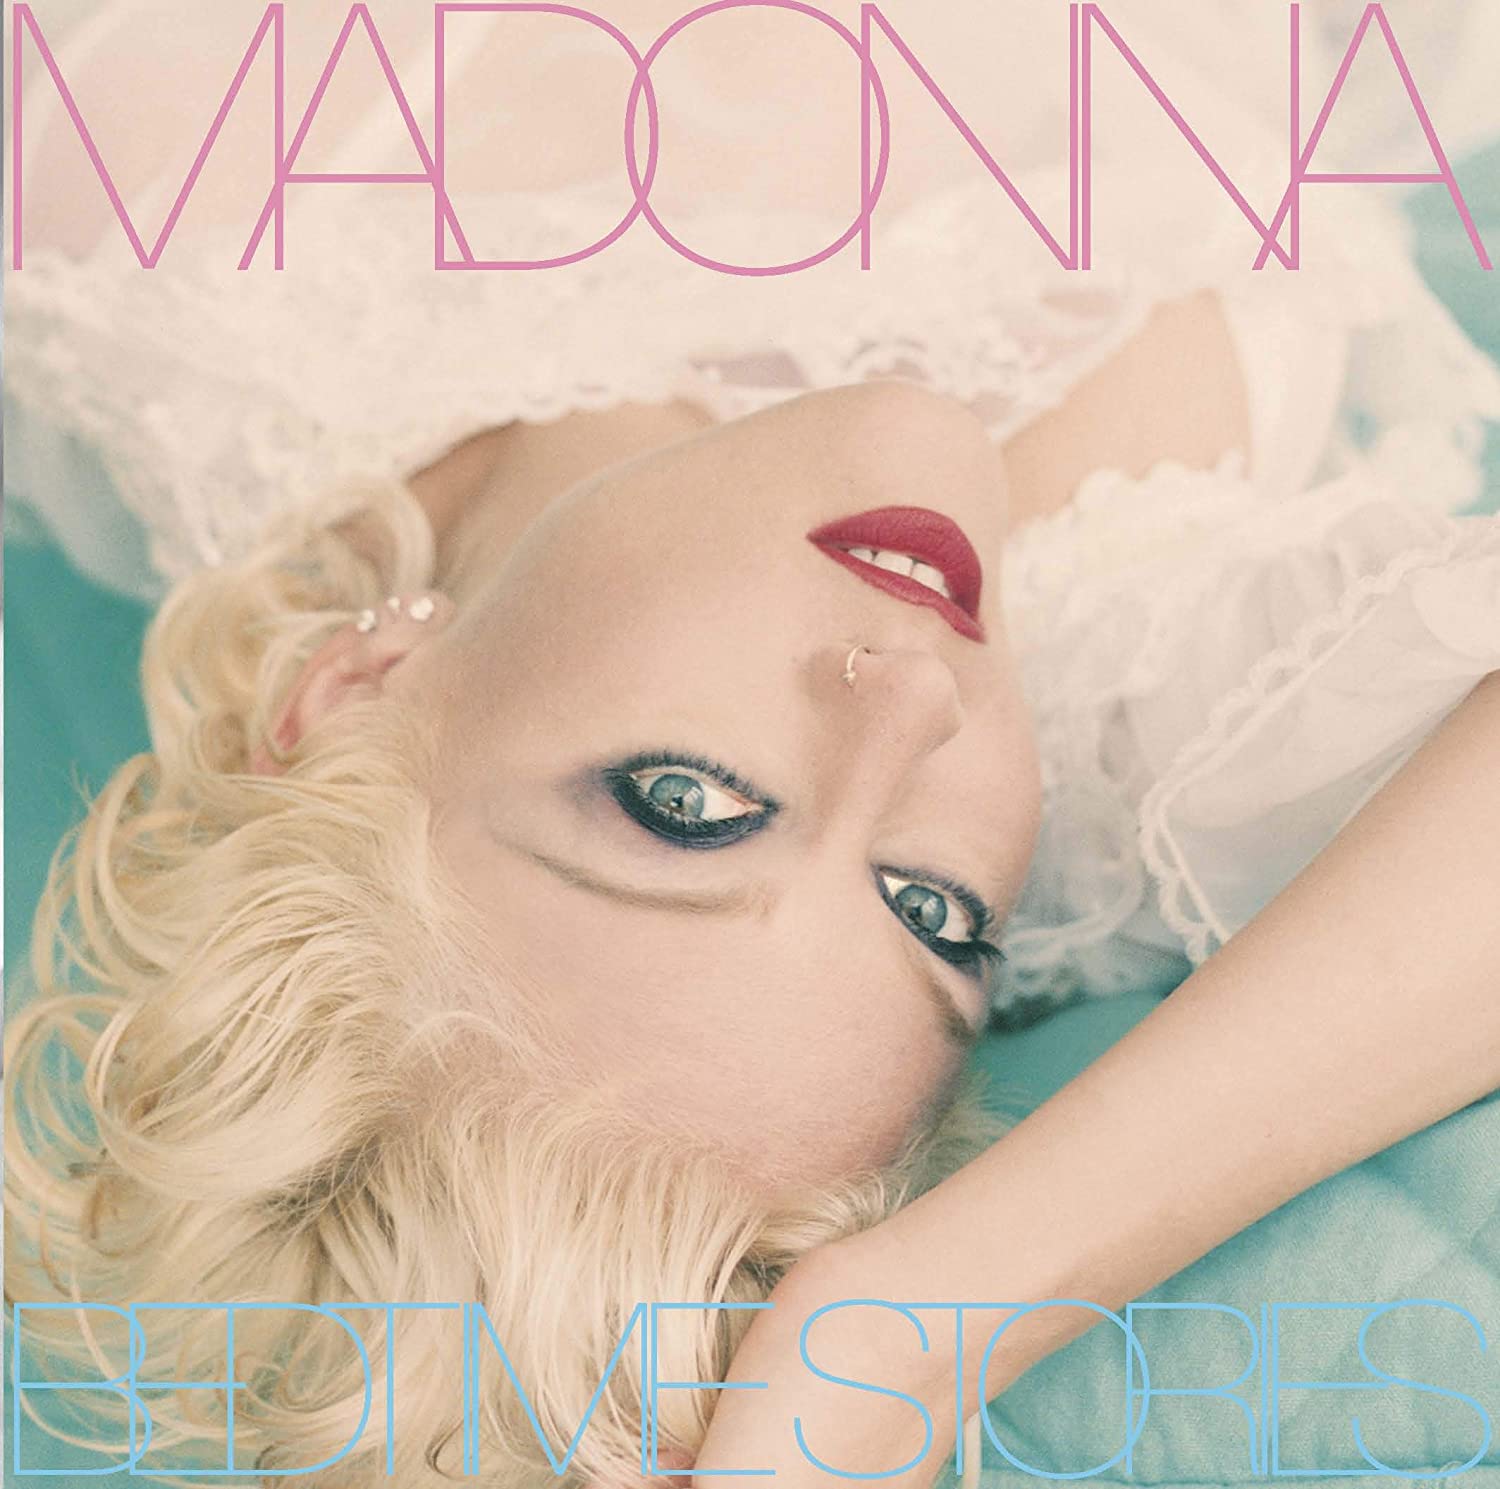 Madonna "Bedtimes Stories" LP